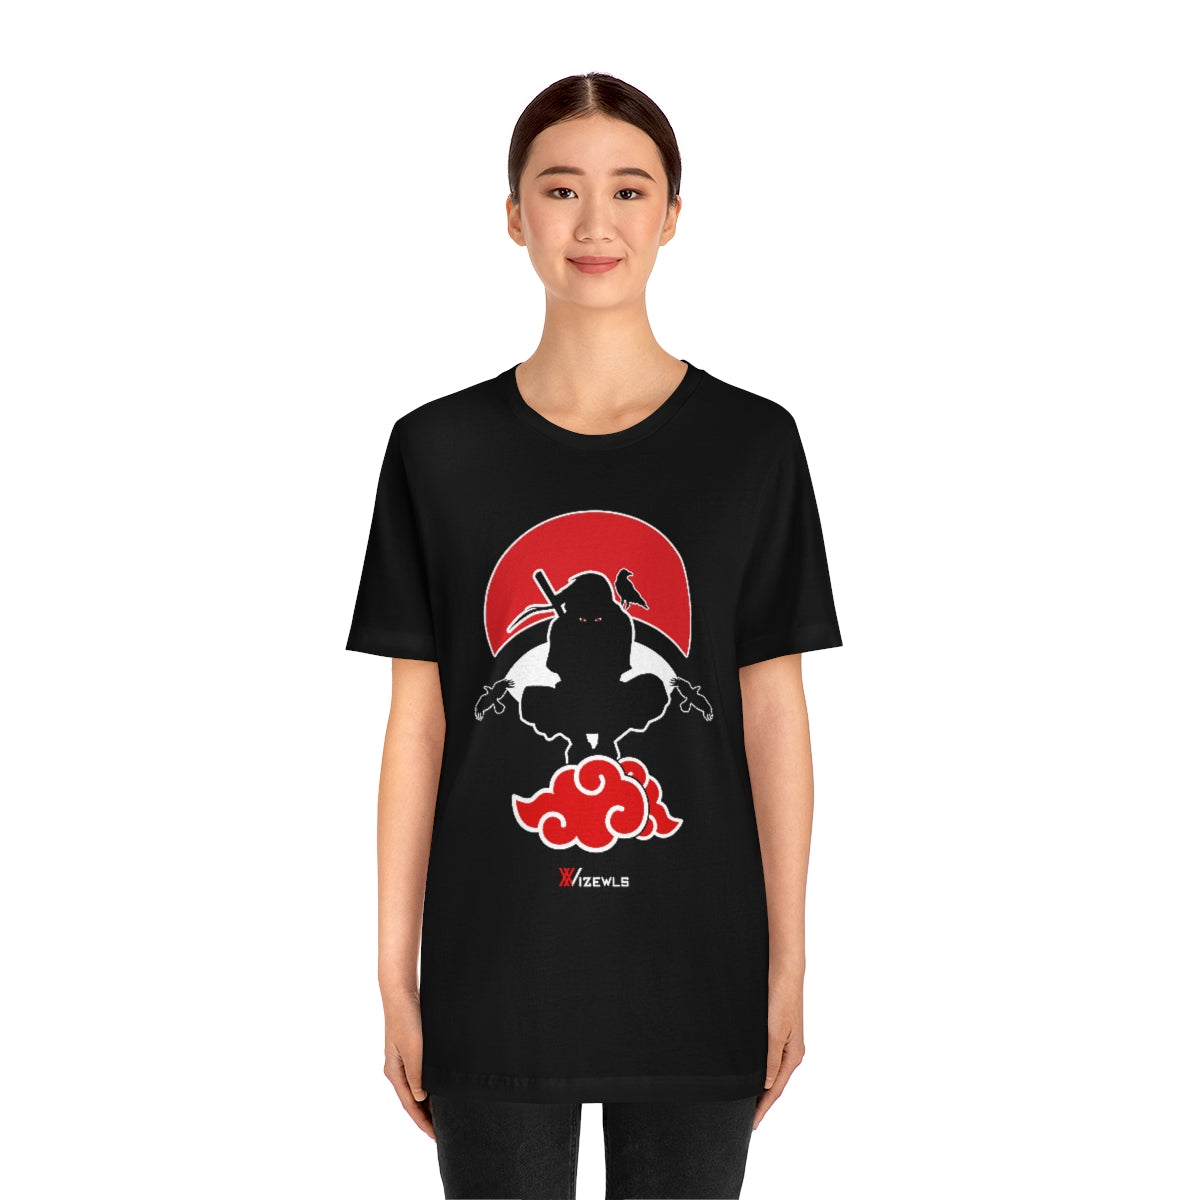 Uchiha Itachi Graphic T-Shirt | Unisex – Hashtag Vizewls